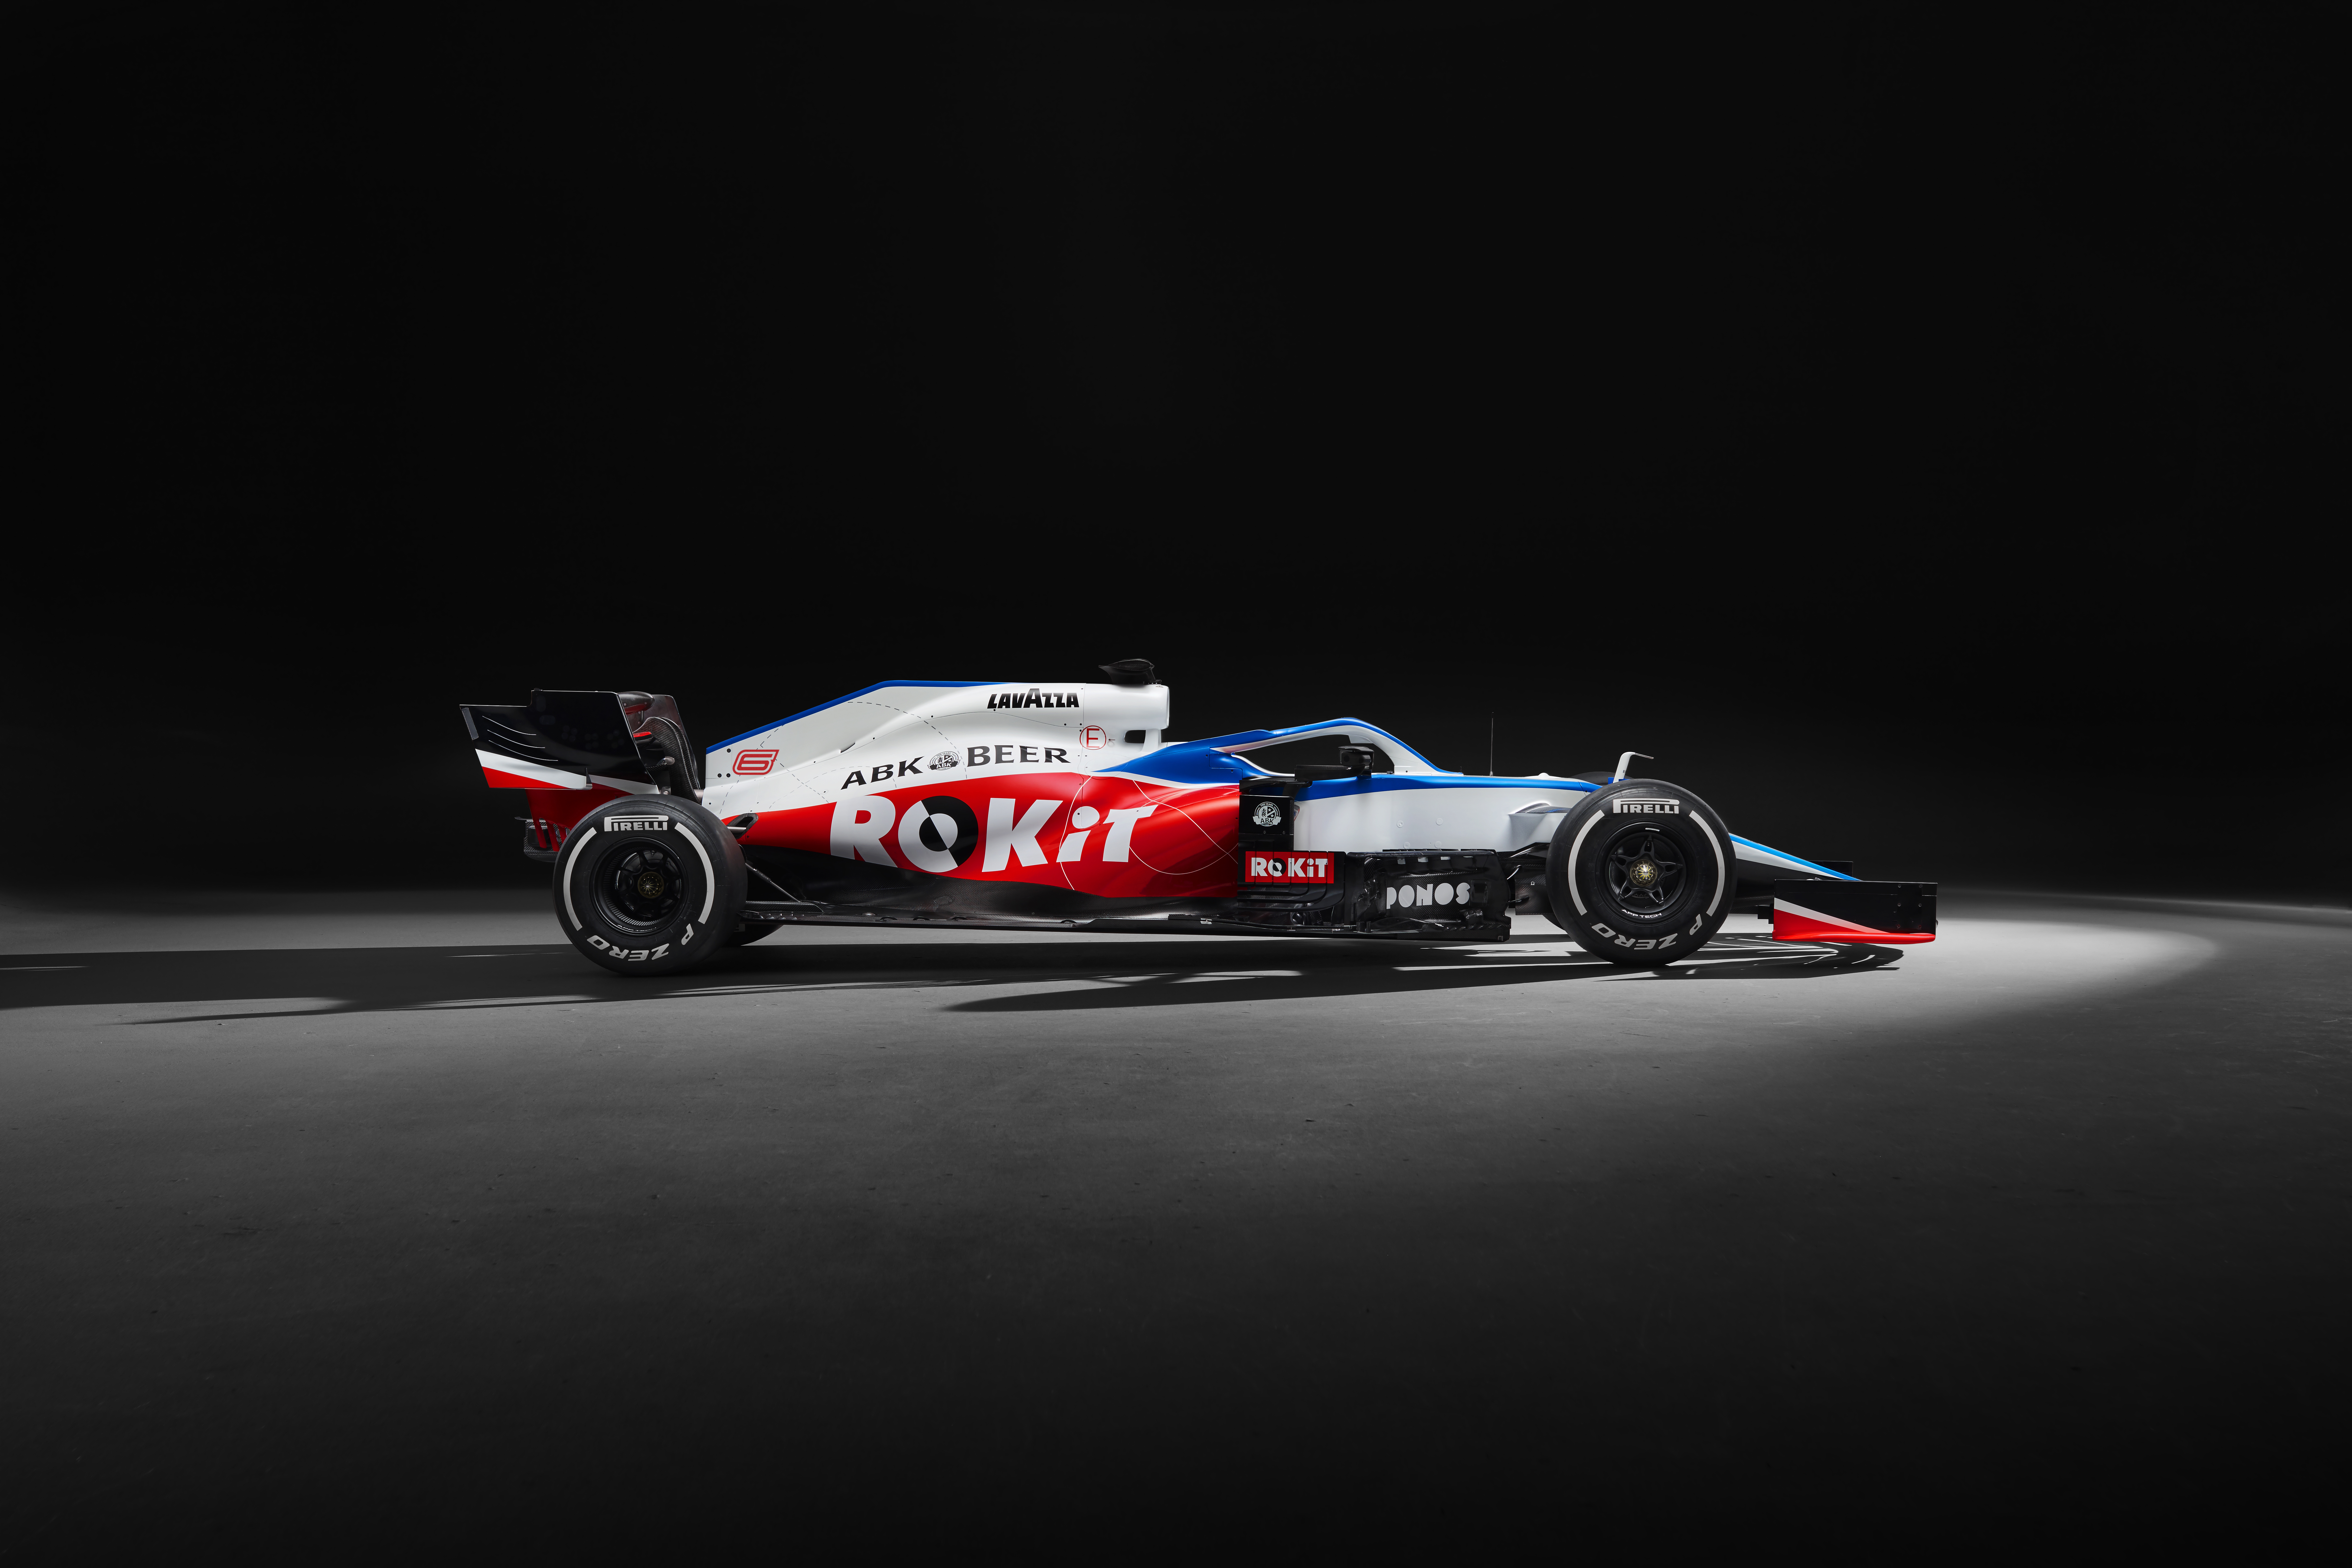 Williams 2020 F1 car